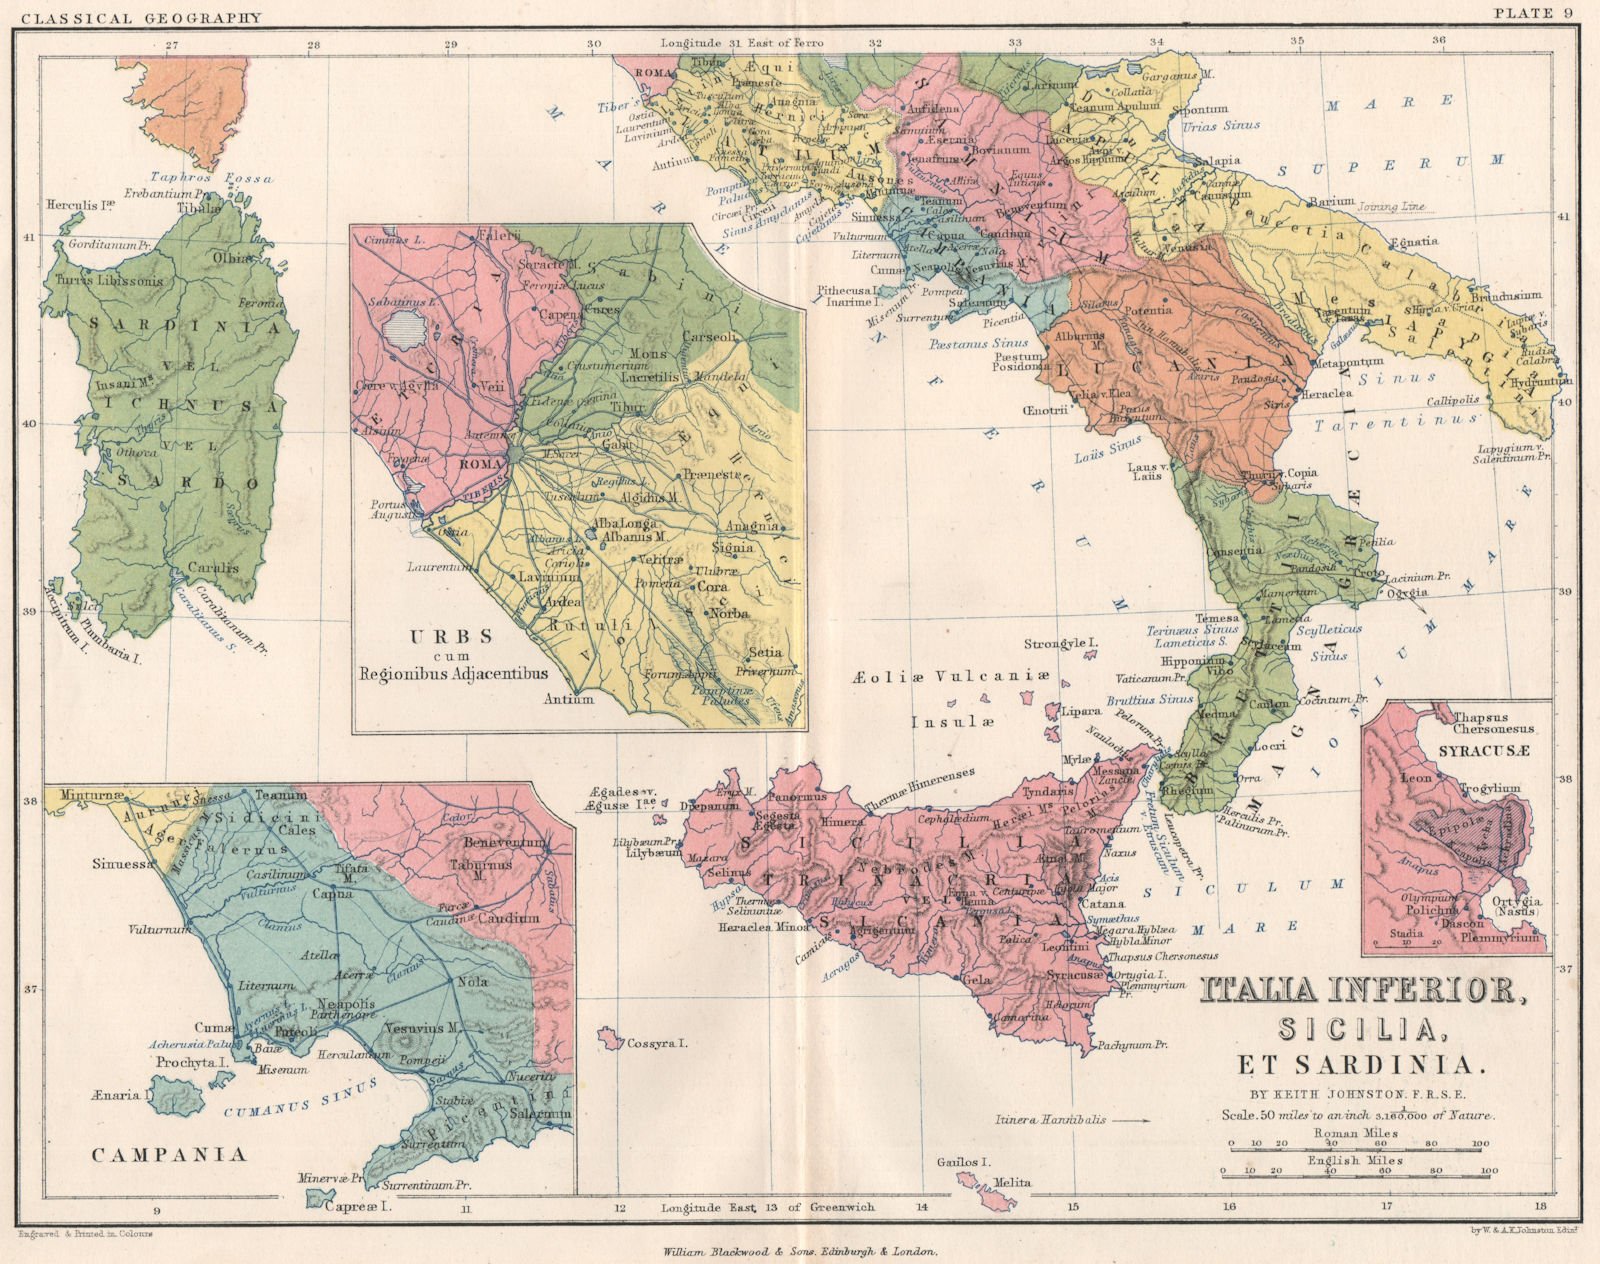 Associate Product 'Italia Inferior, Sicilia, et Sardinia'. South Ancient Italy. JOHNSTON 1855 map